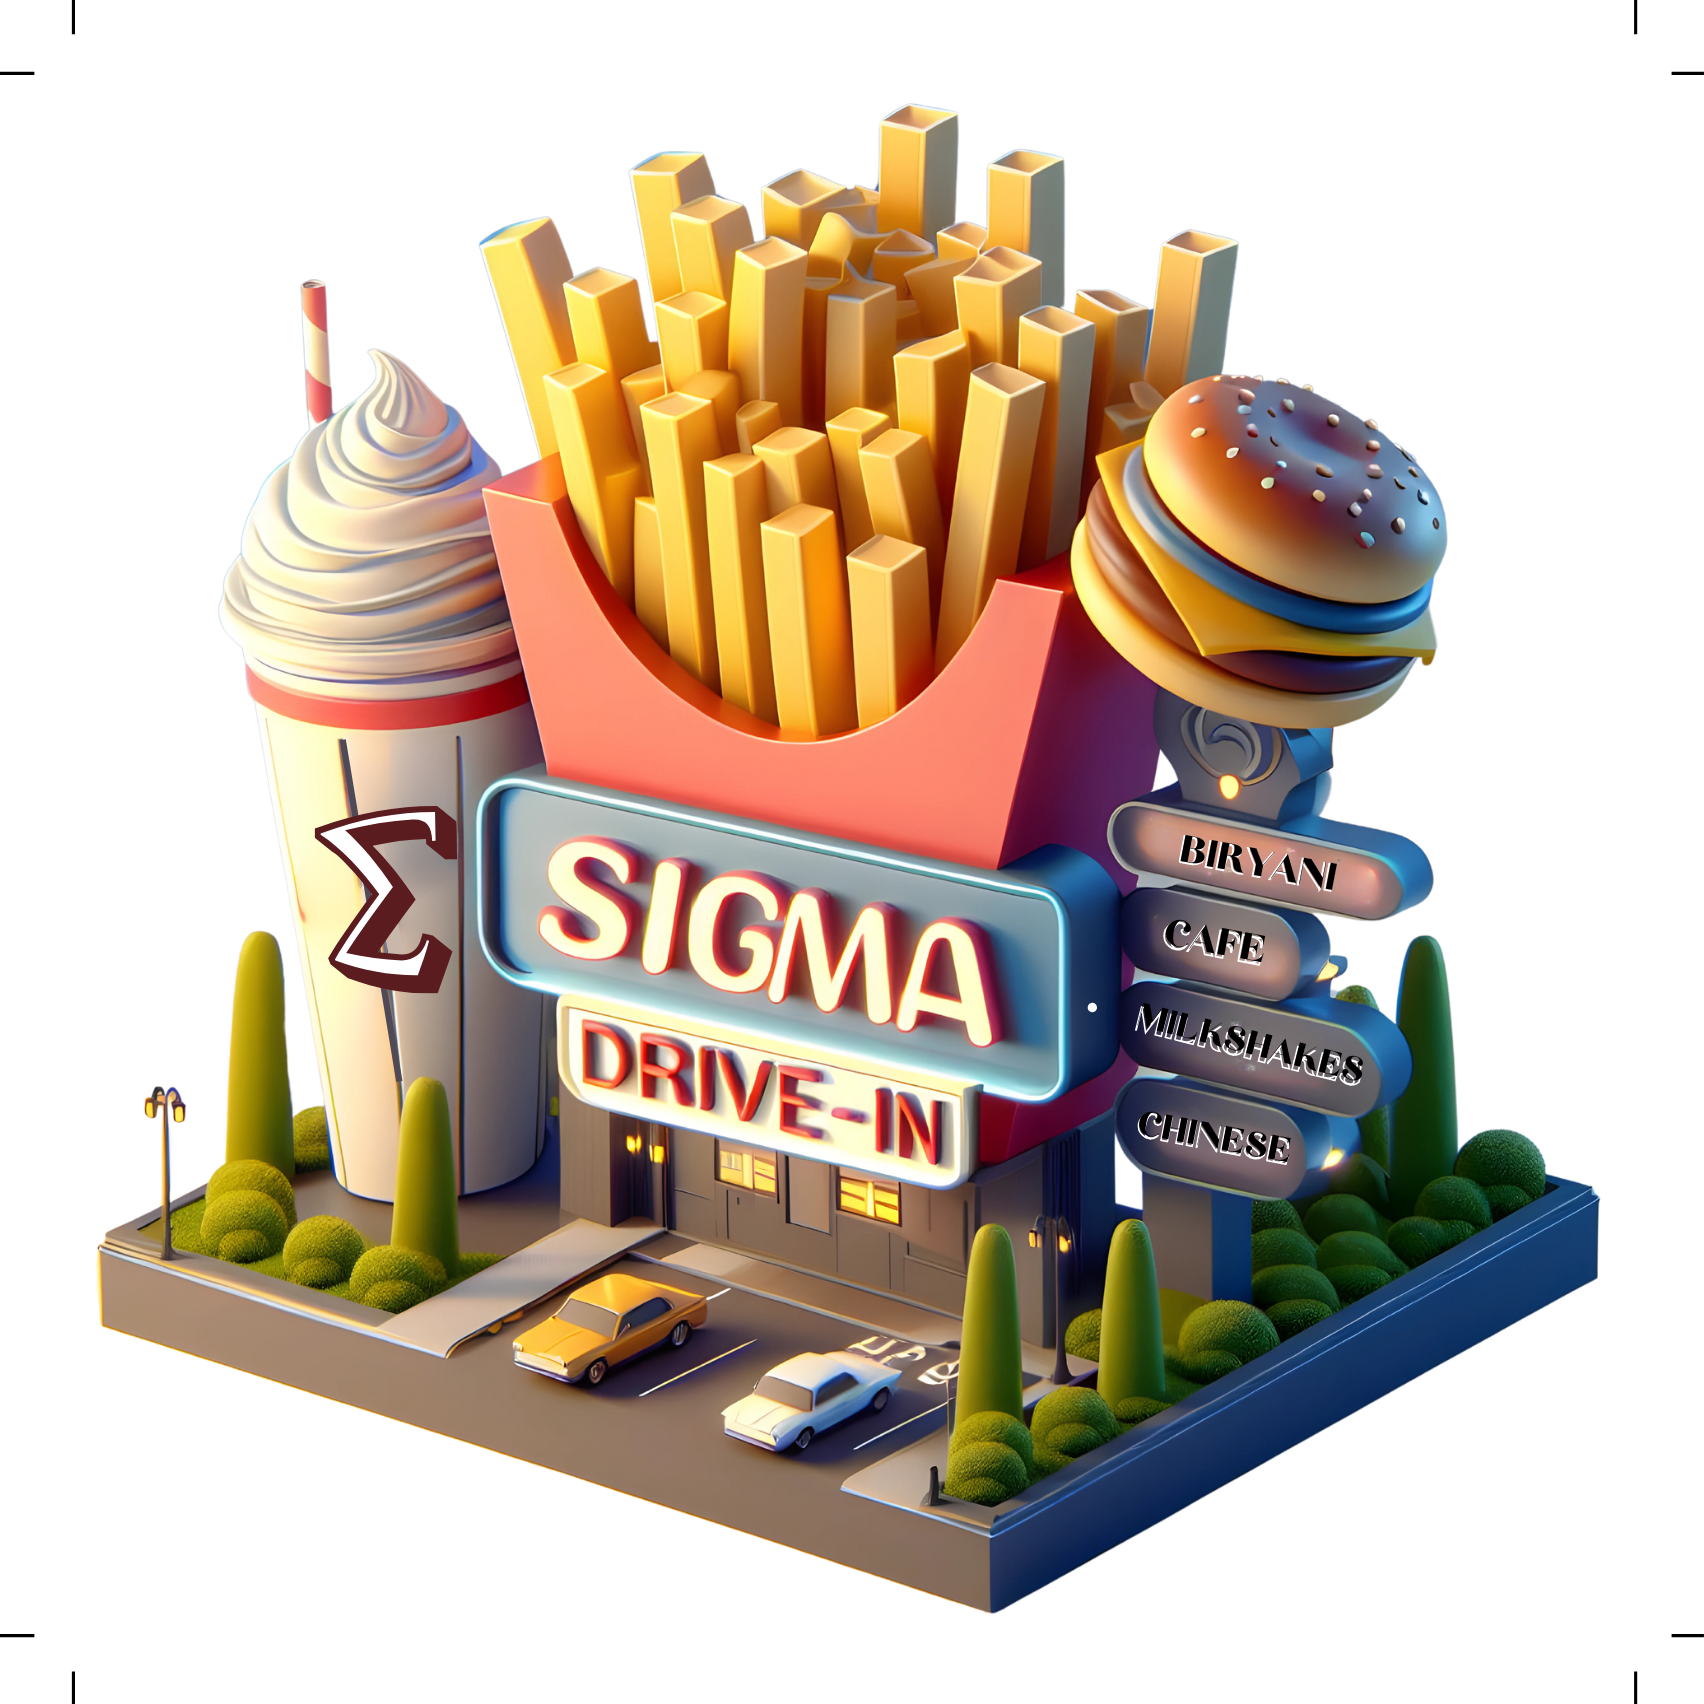 sigma drive-in | restaurant in hyderabad